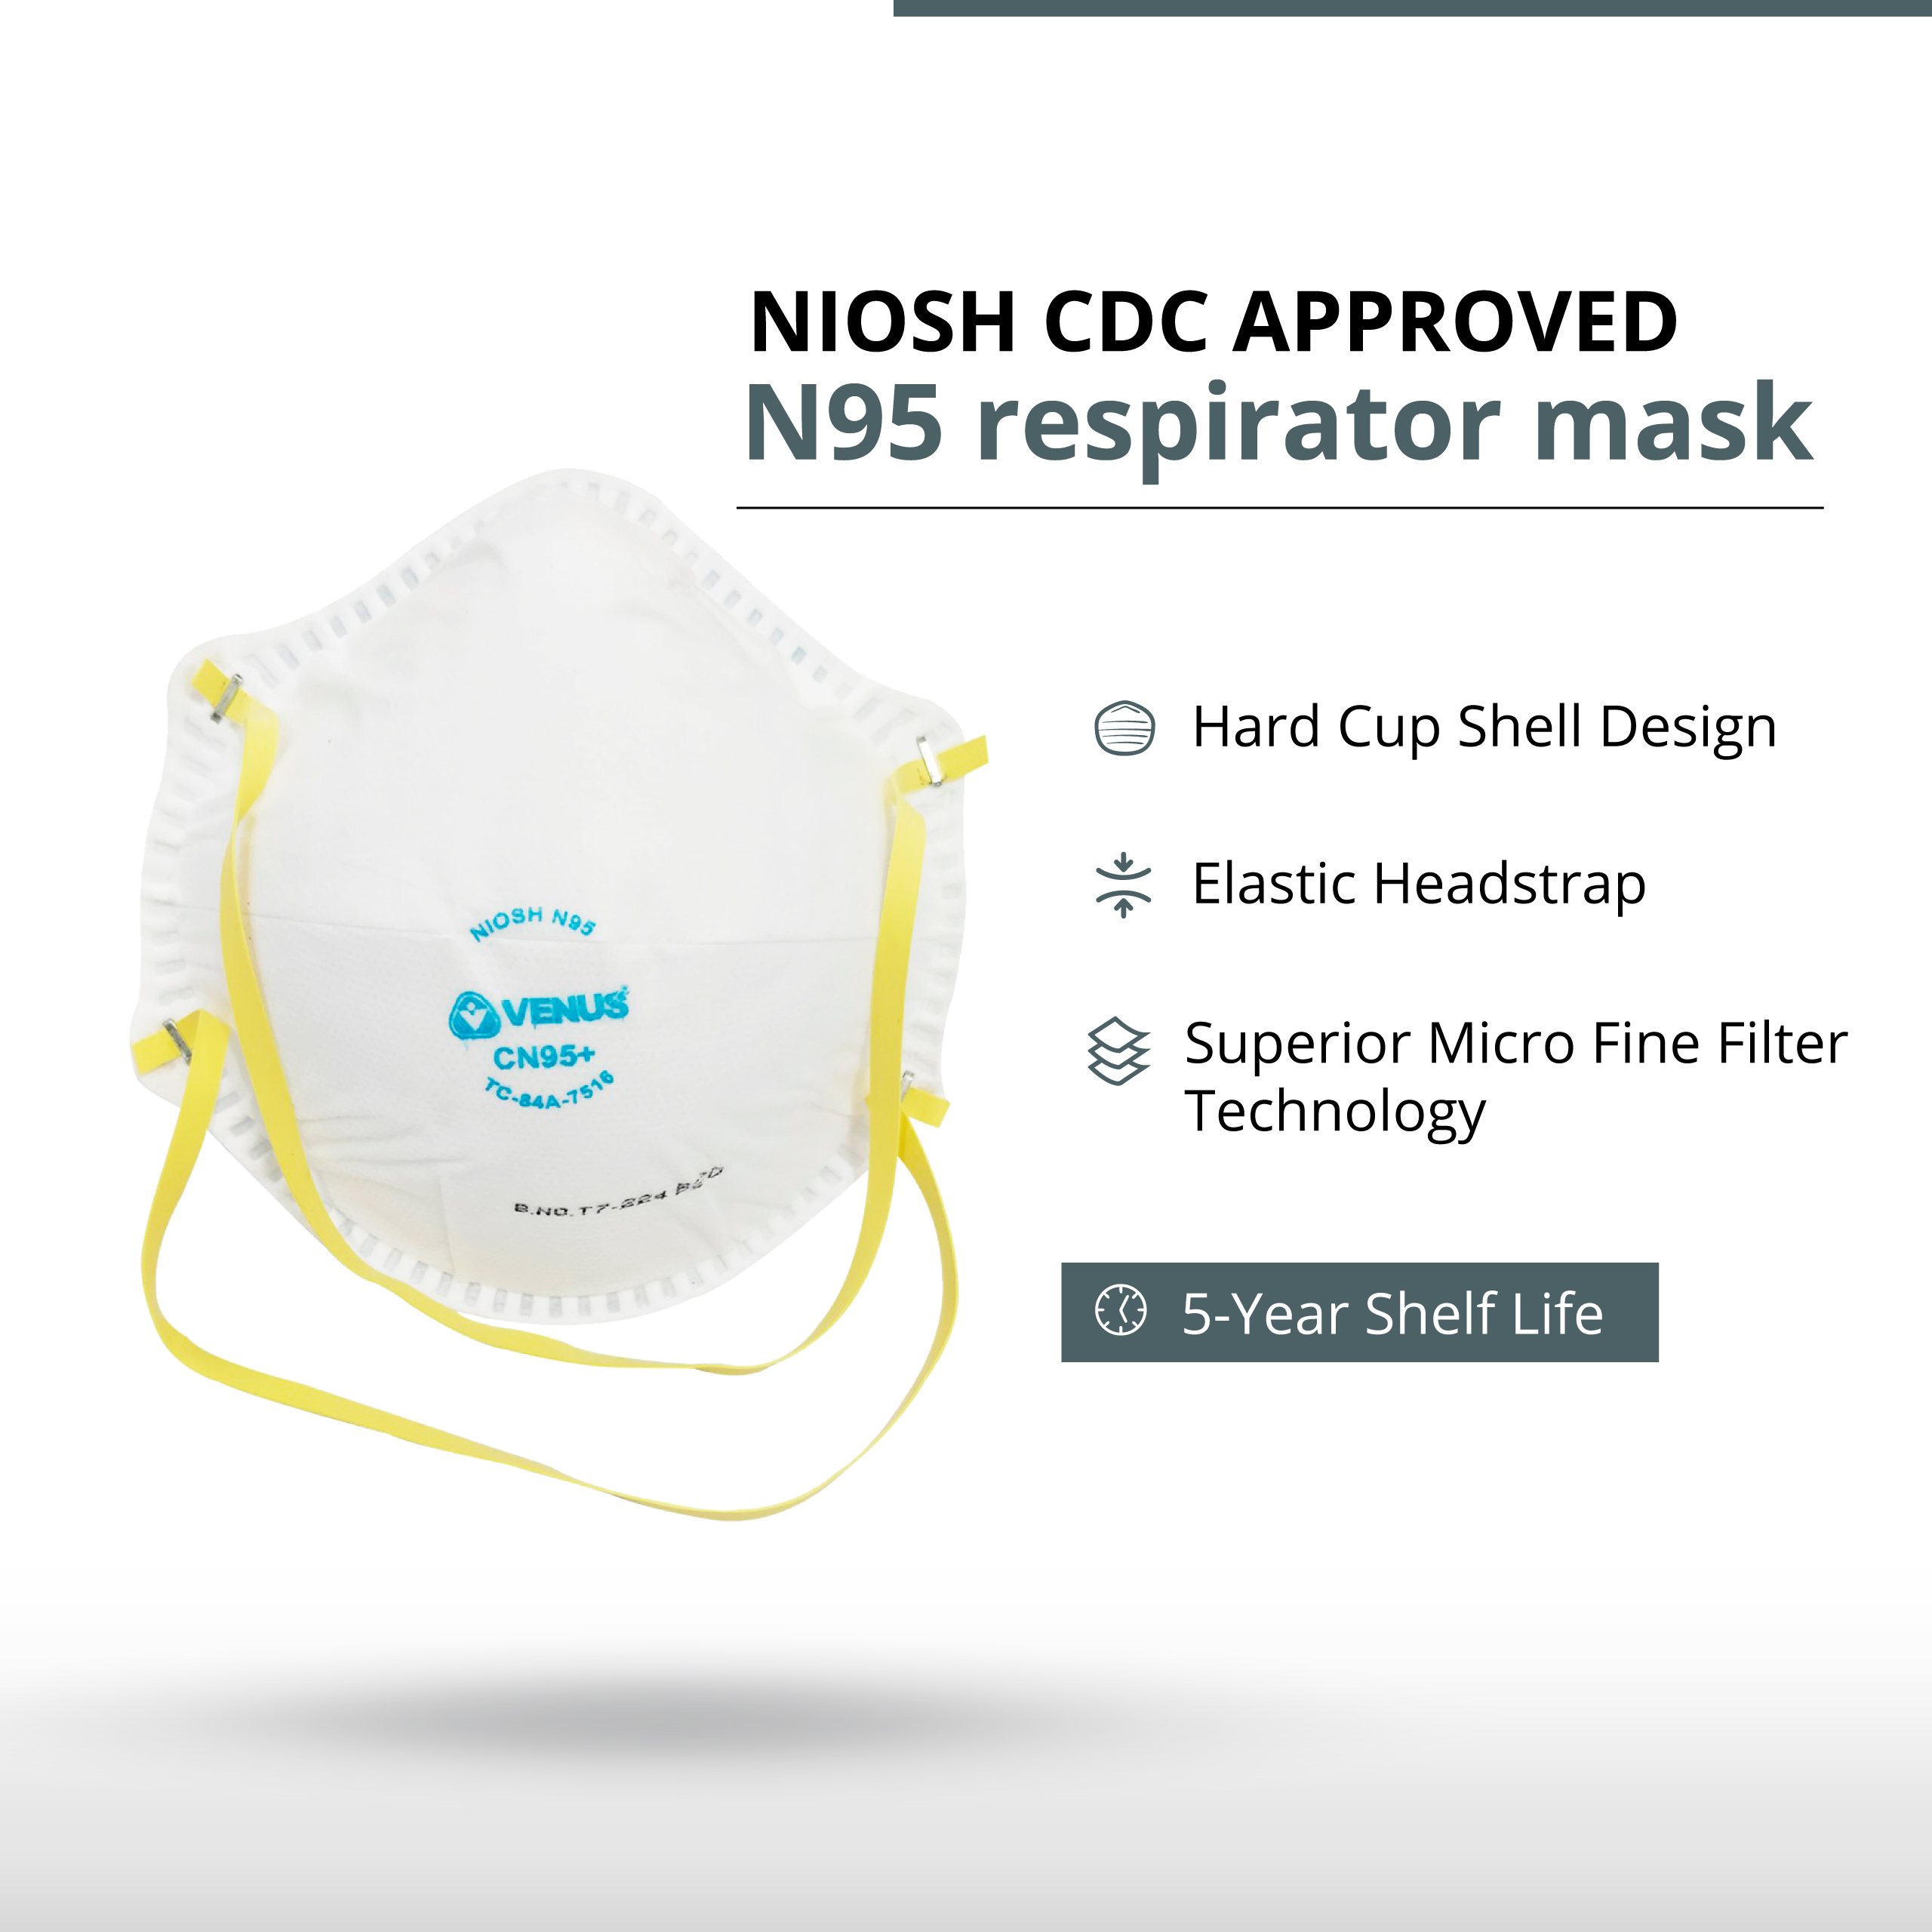 FDA NIOSH CDC Approved Professional Quality N95 Respirator Mask ($2 Per Mask) CASE of 200 Masks